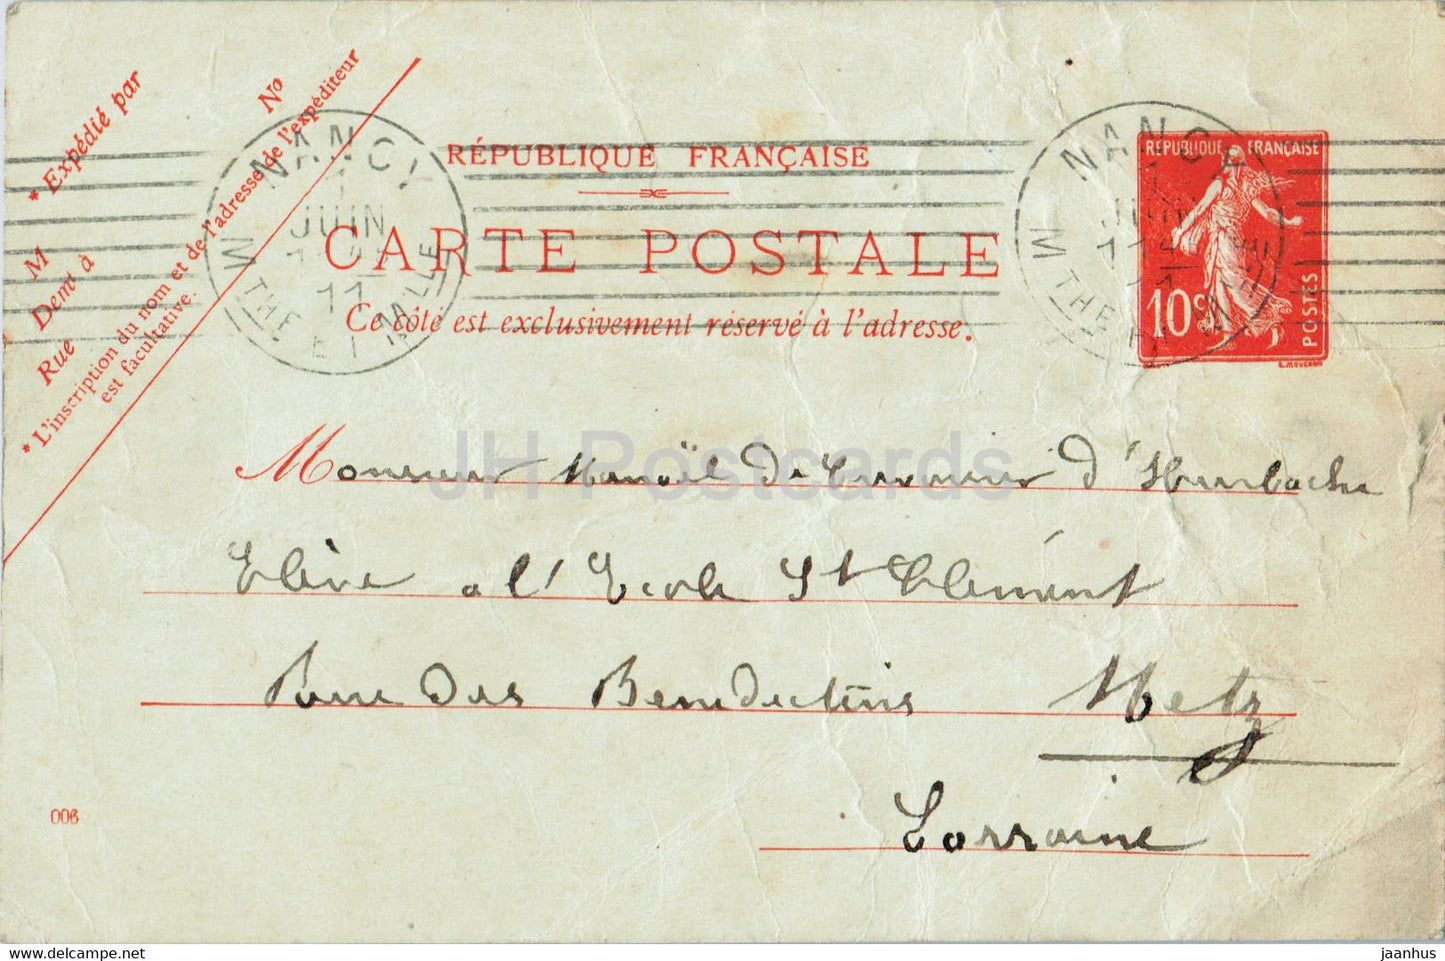 Carte Postale - postal stationery - 1 - old postcard - 1911 - France - used - JH Postcards